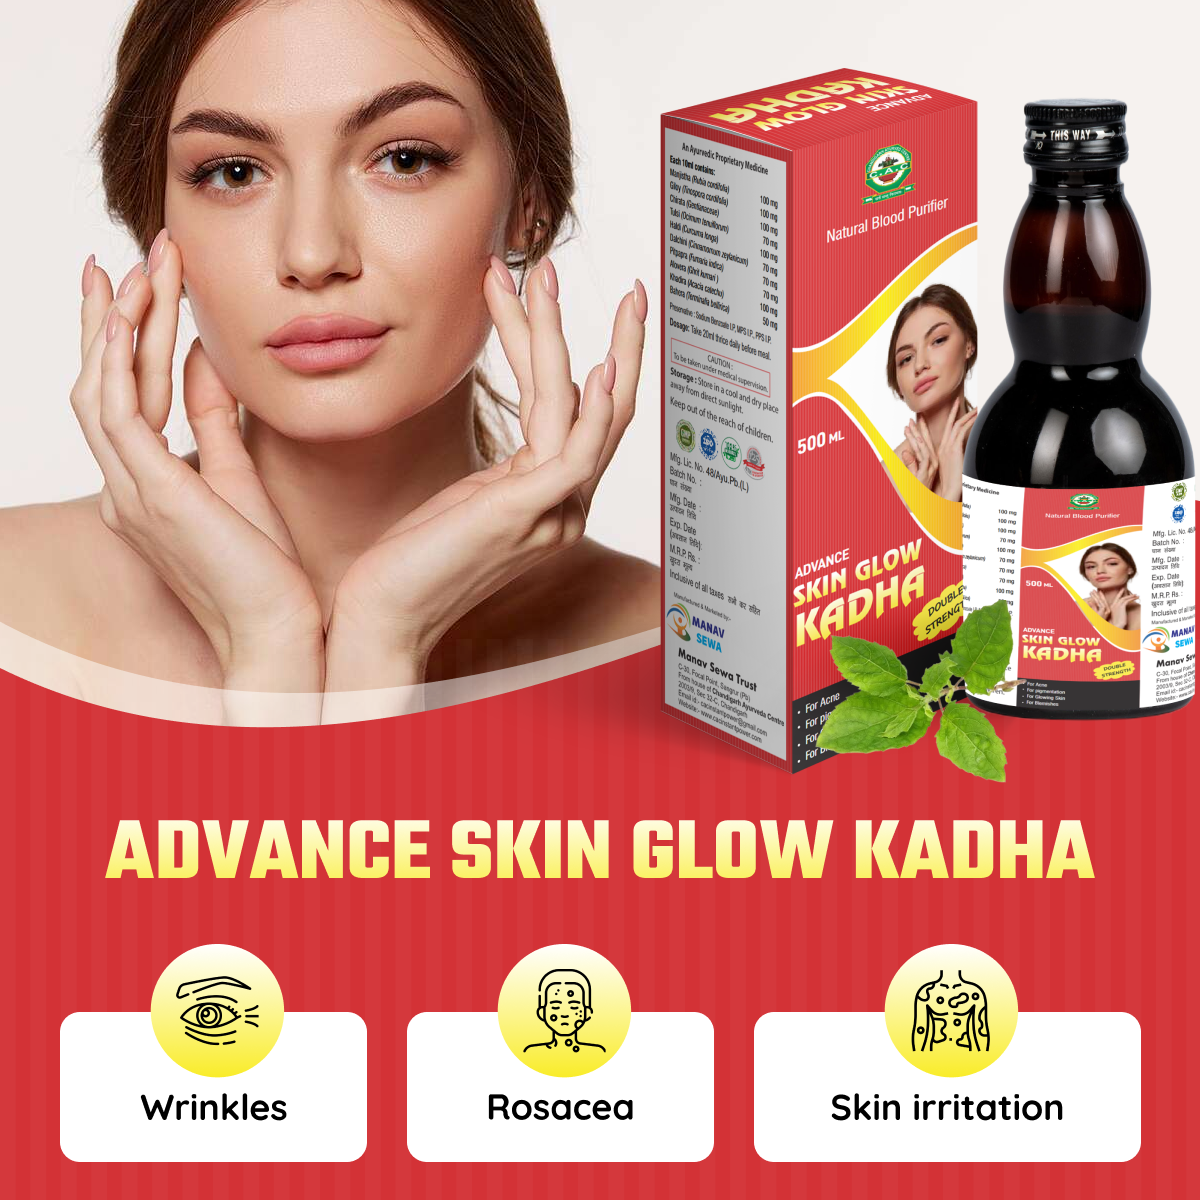 Advance Skin Glow Kadha